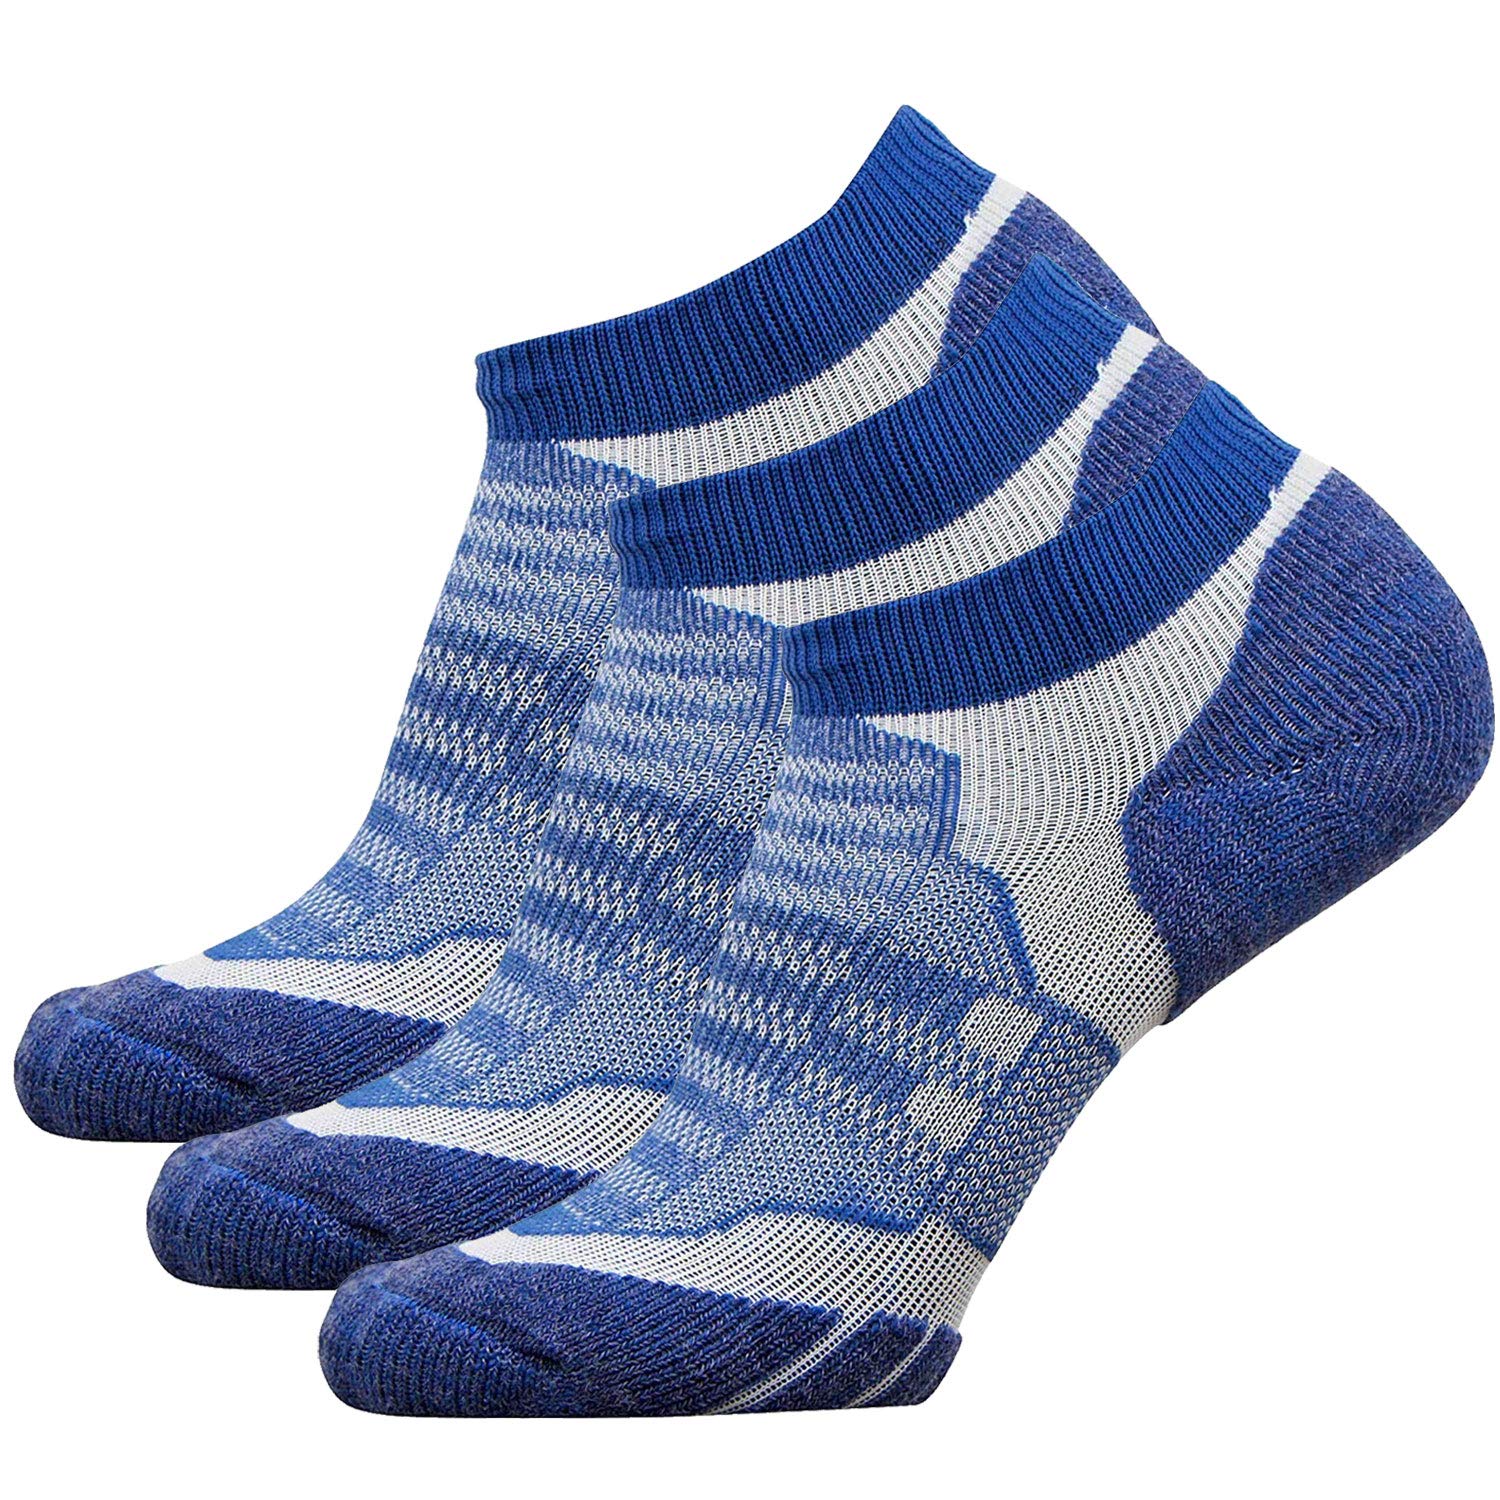 Low Cut Wool Running Socks Sports & Everyday Socks Pure Athlete